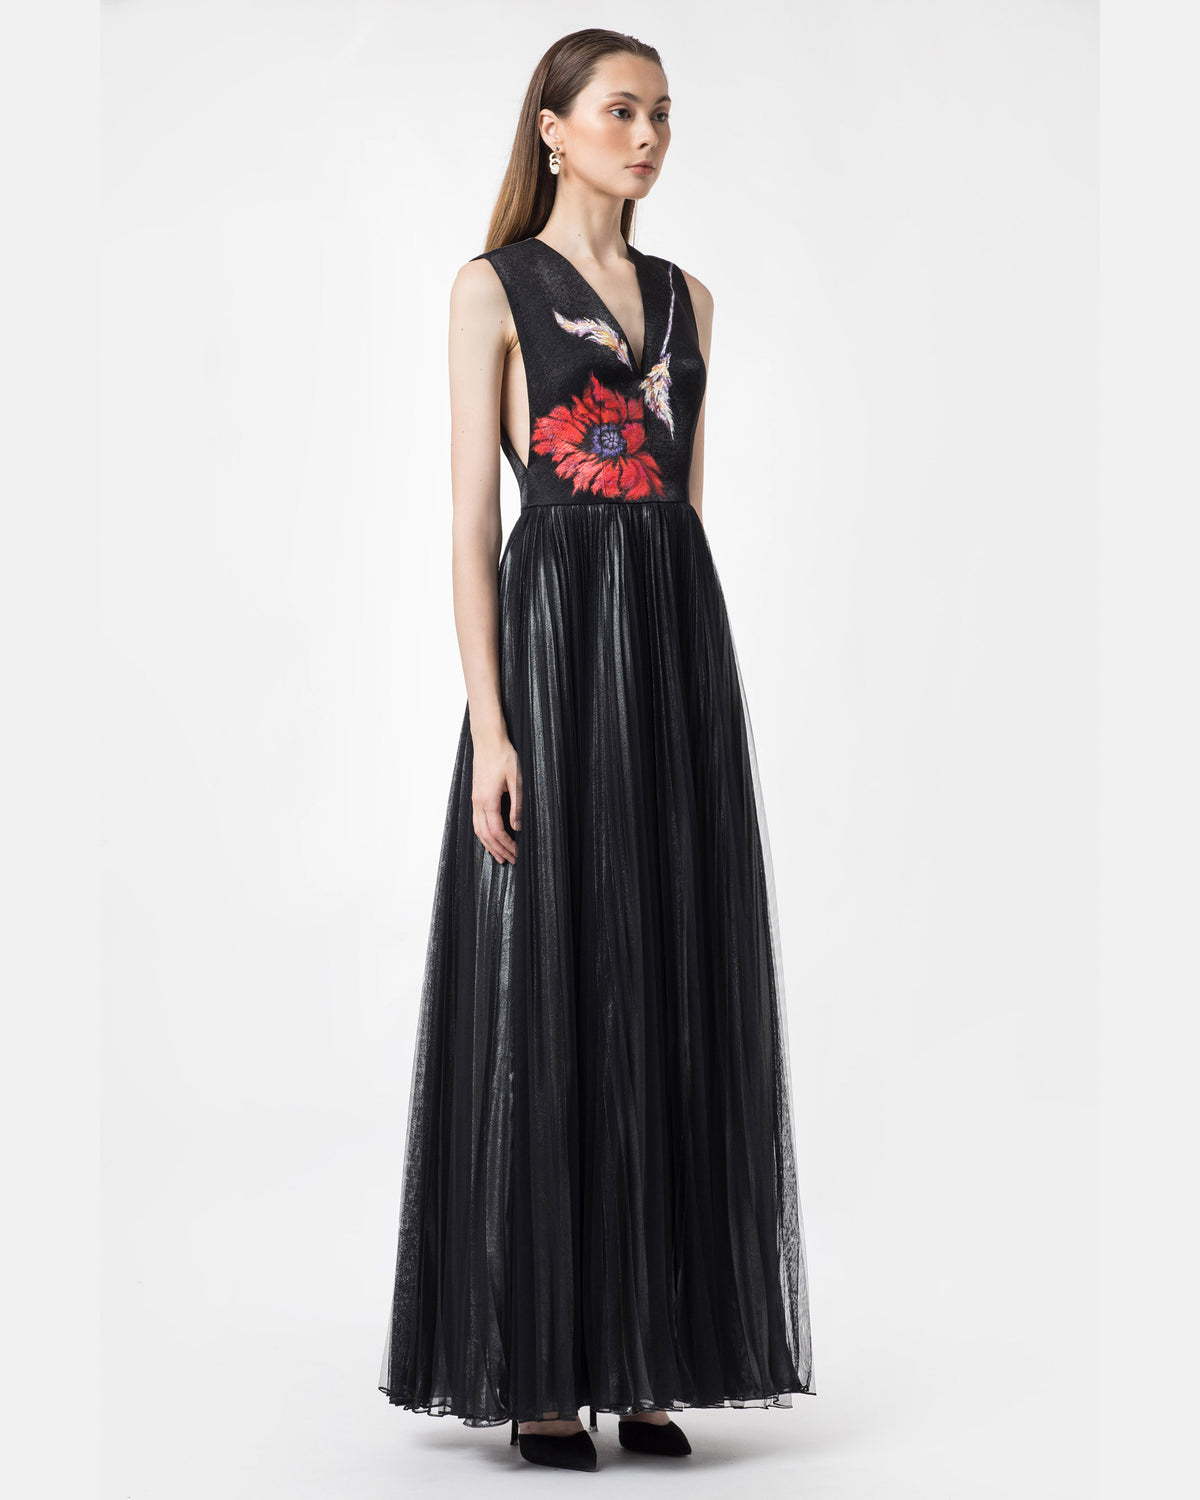 Poppy-painted Sleeveless Black  Gown Dress